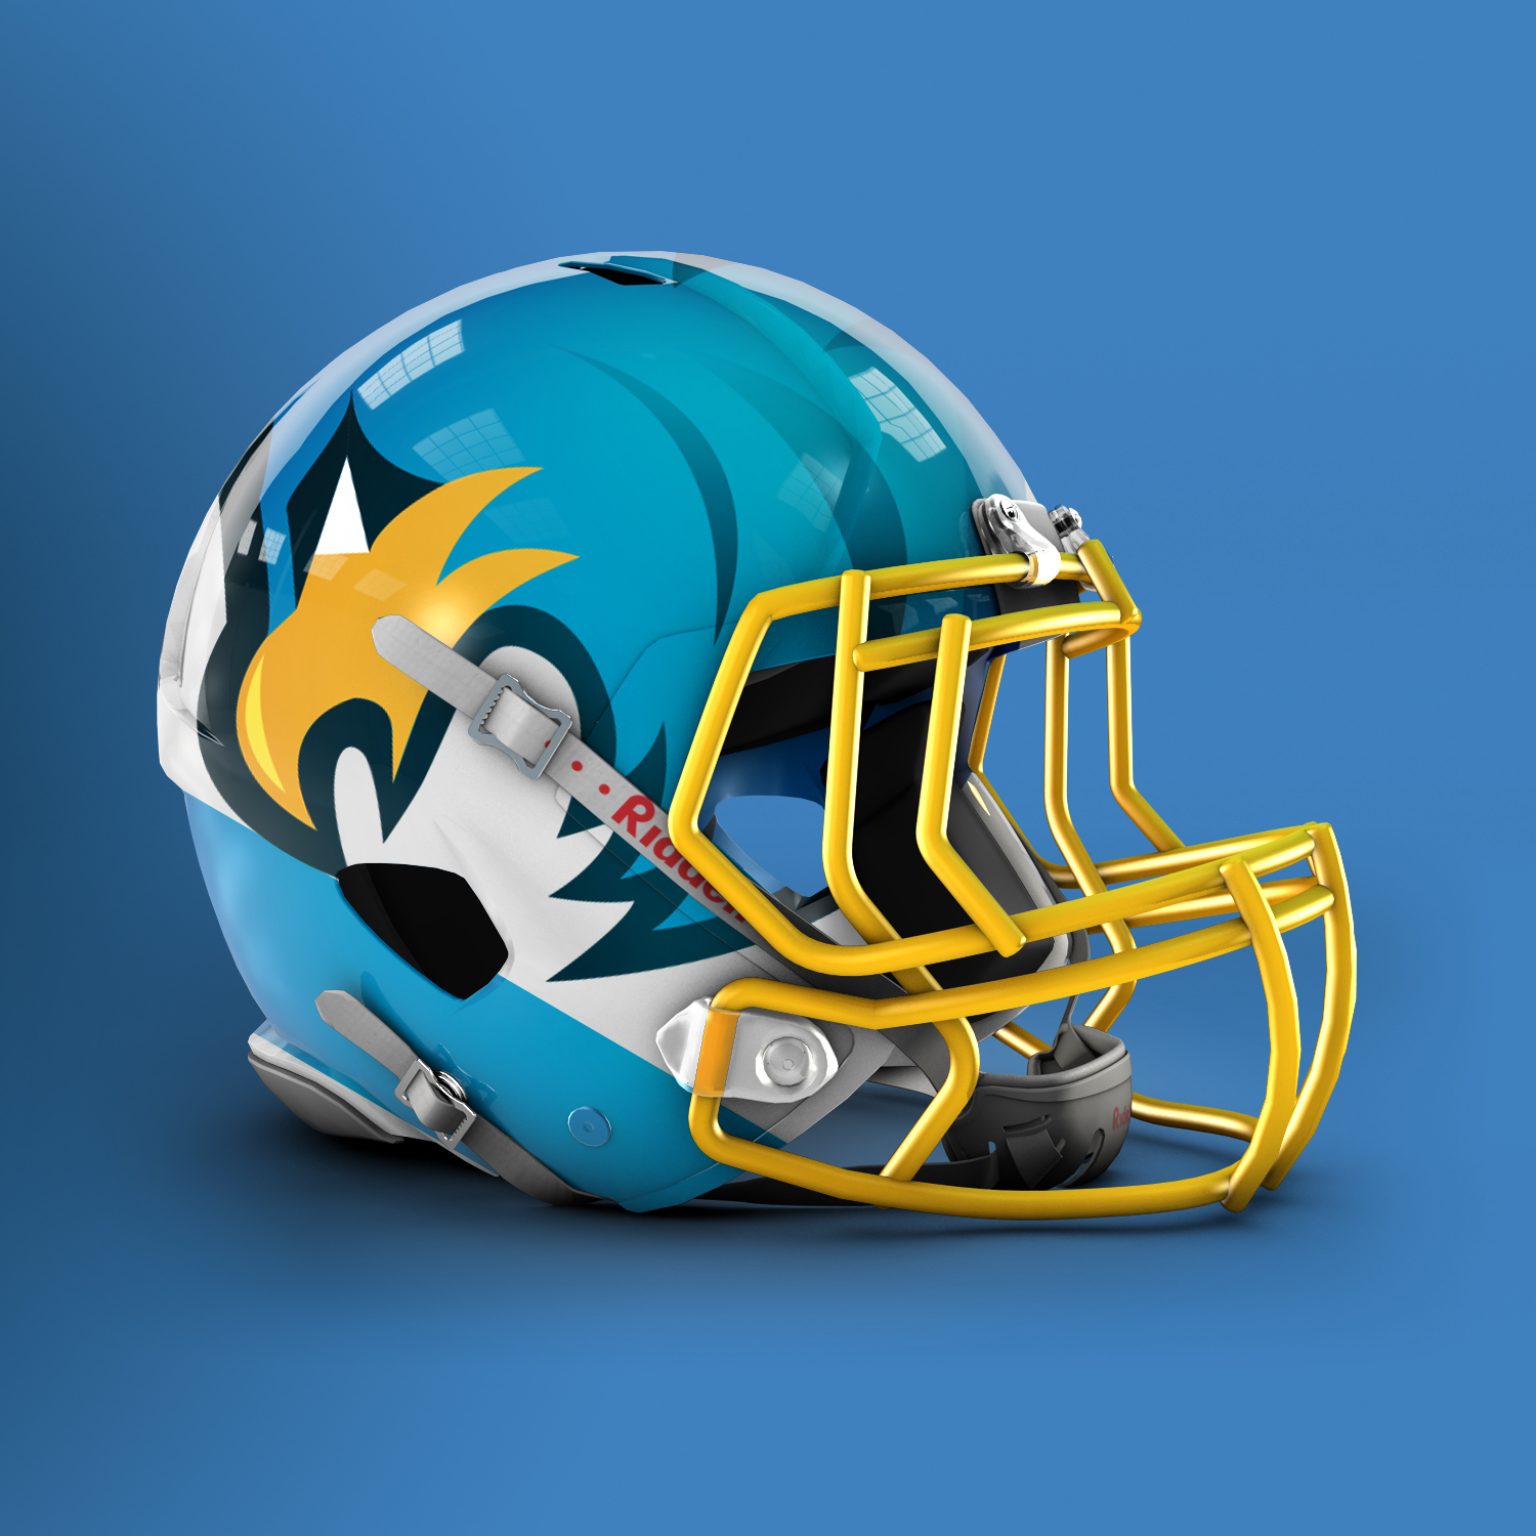 Helmet branding for Griffins